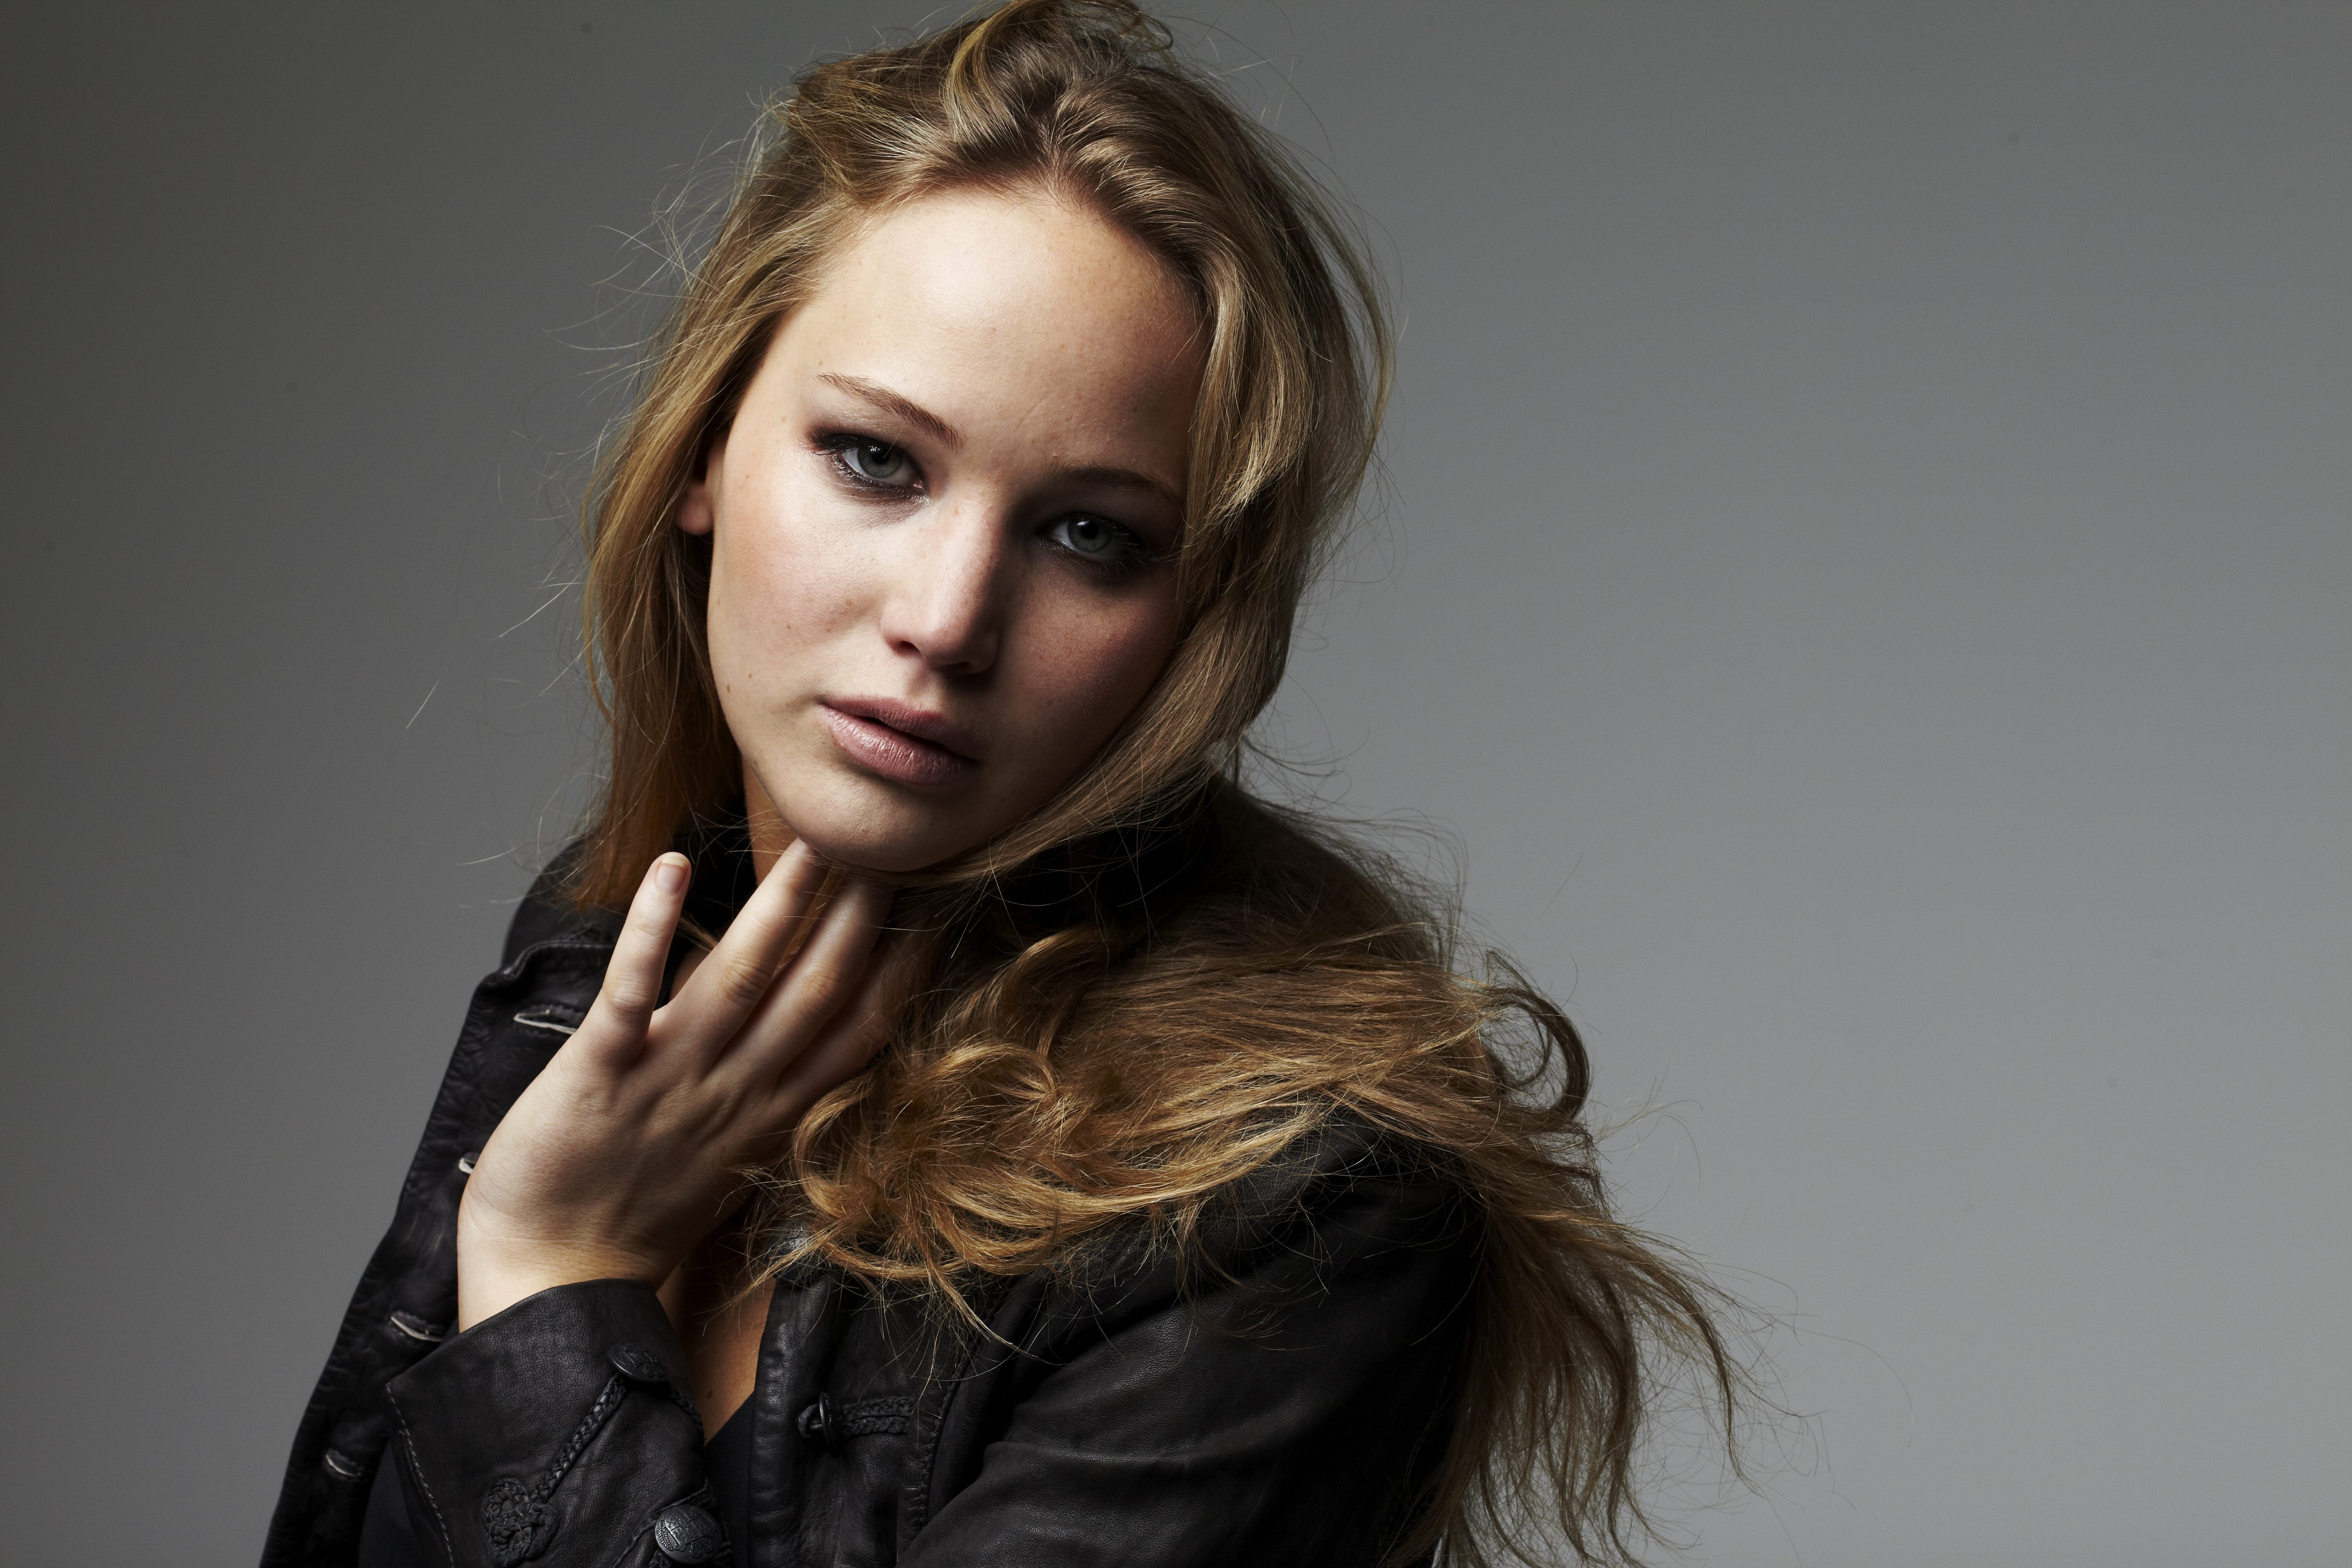 Jennifer Lawrence Actress Celebrity Blonde Green Eyes Pink Lipstick Hand On Face Women 5616x3744